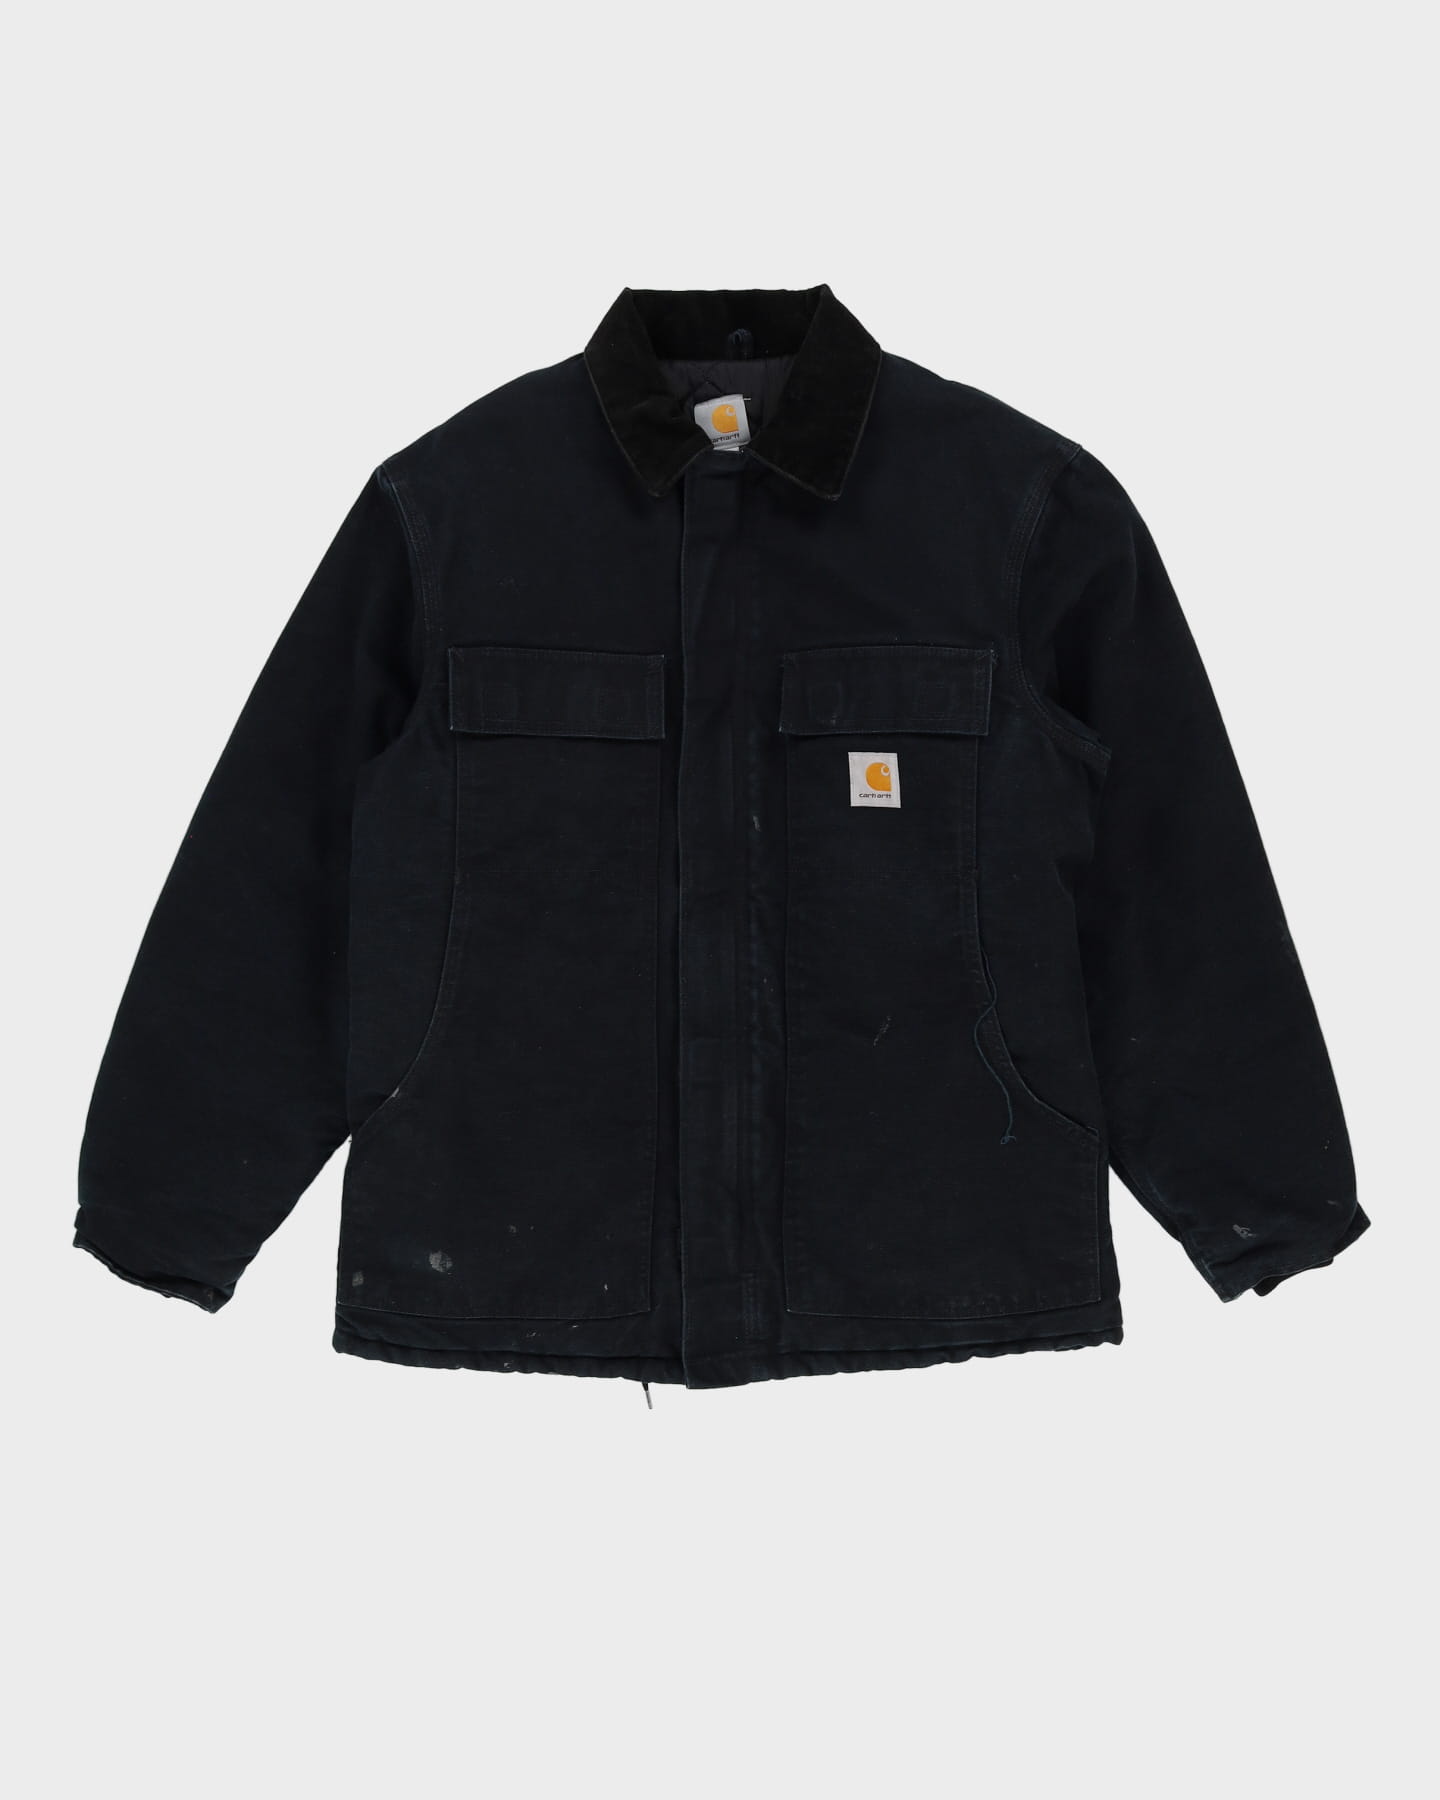 Carhartt Black Workwear / Chore Jacket - M